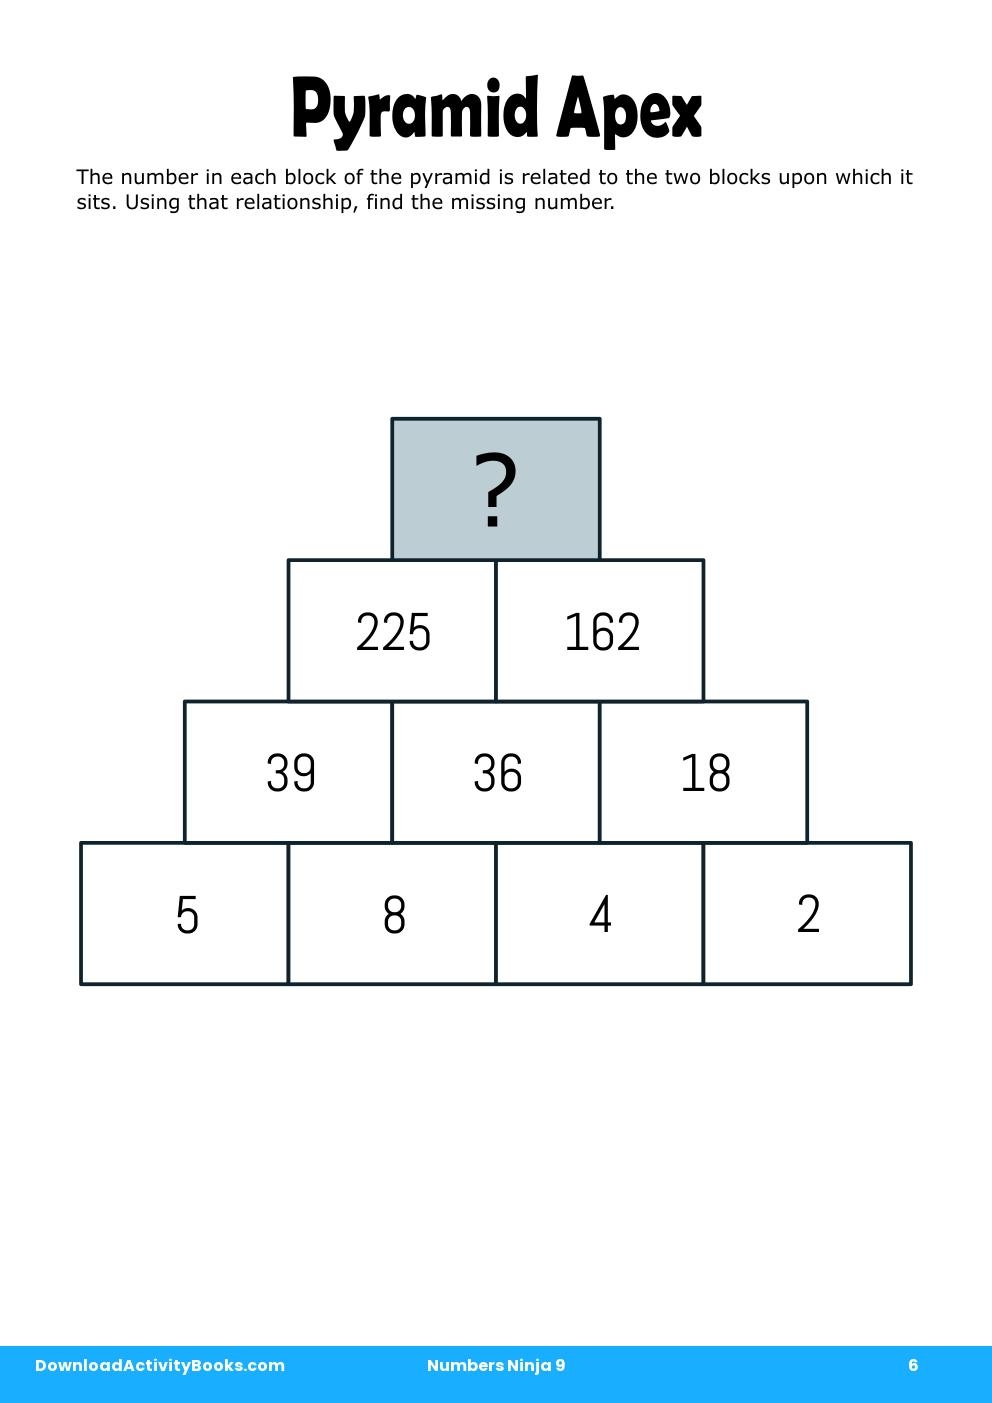 Pyramid Apex in Numbers Ninja 9